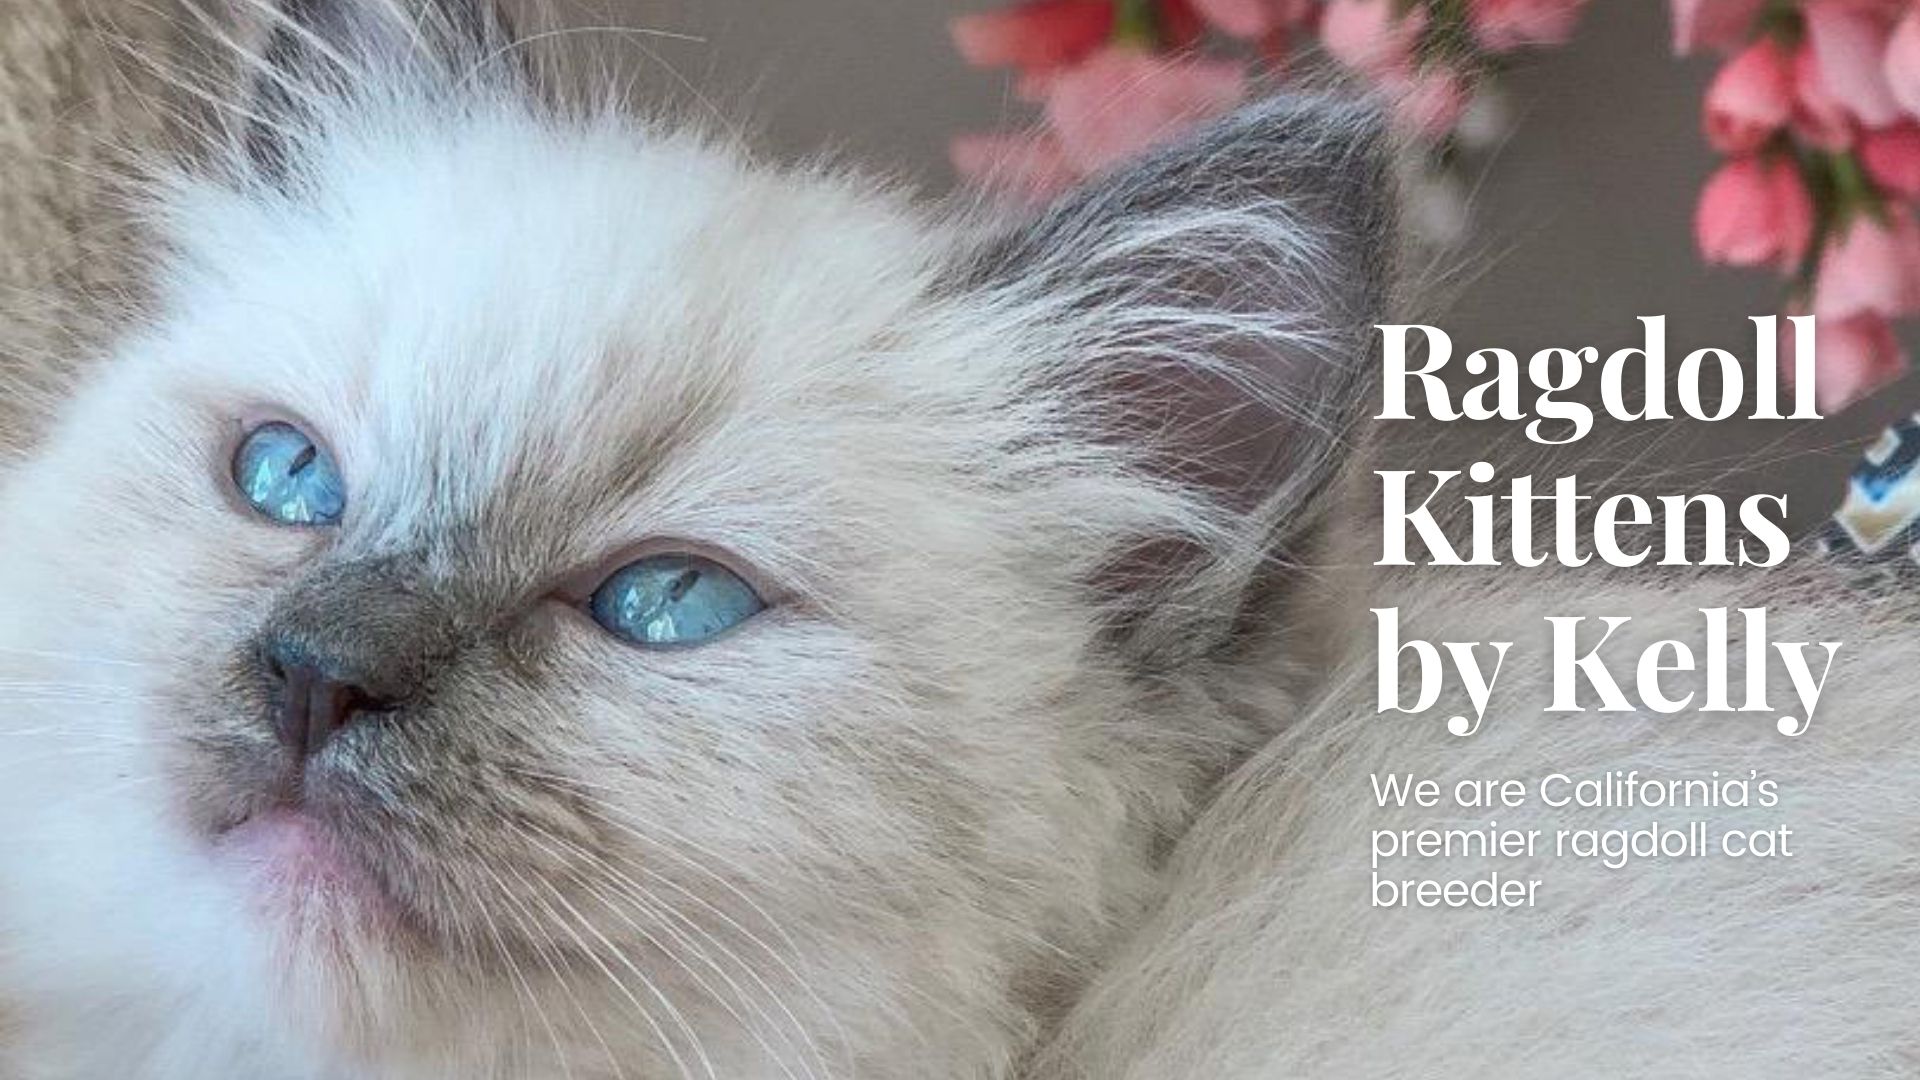 Ragdoll Kittens by Kelly | Ragdoll Cat Breeder in Southern California